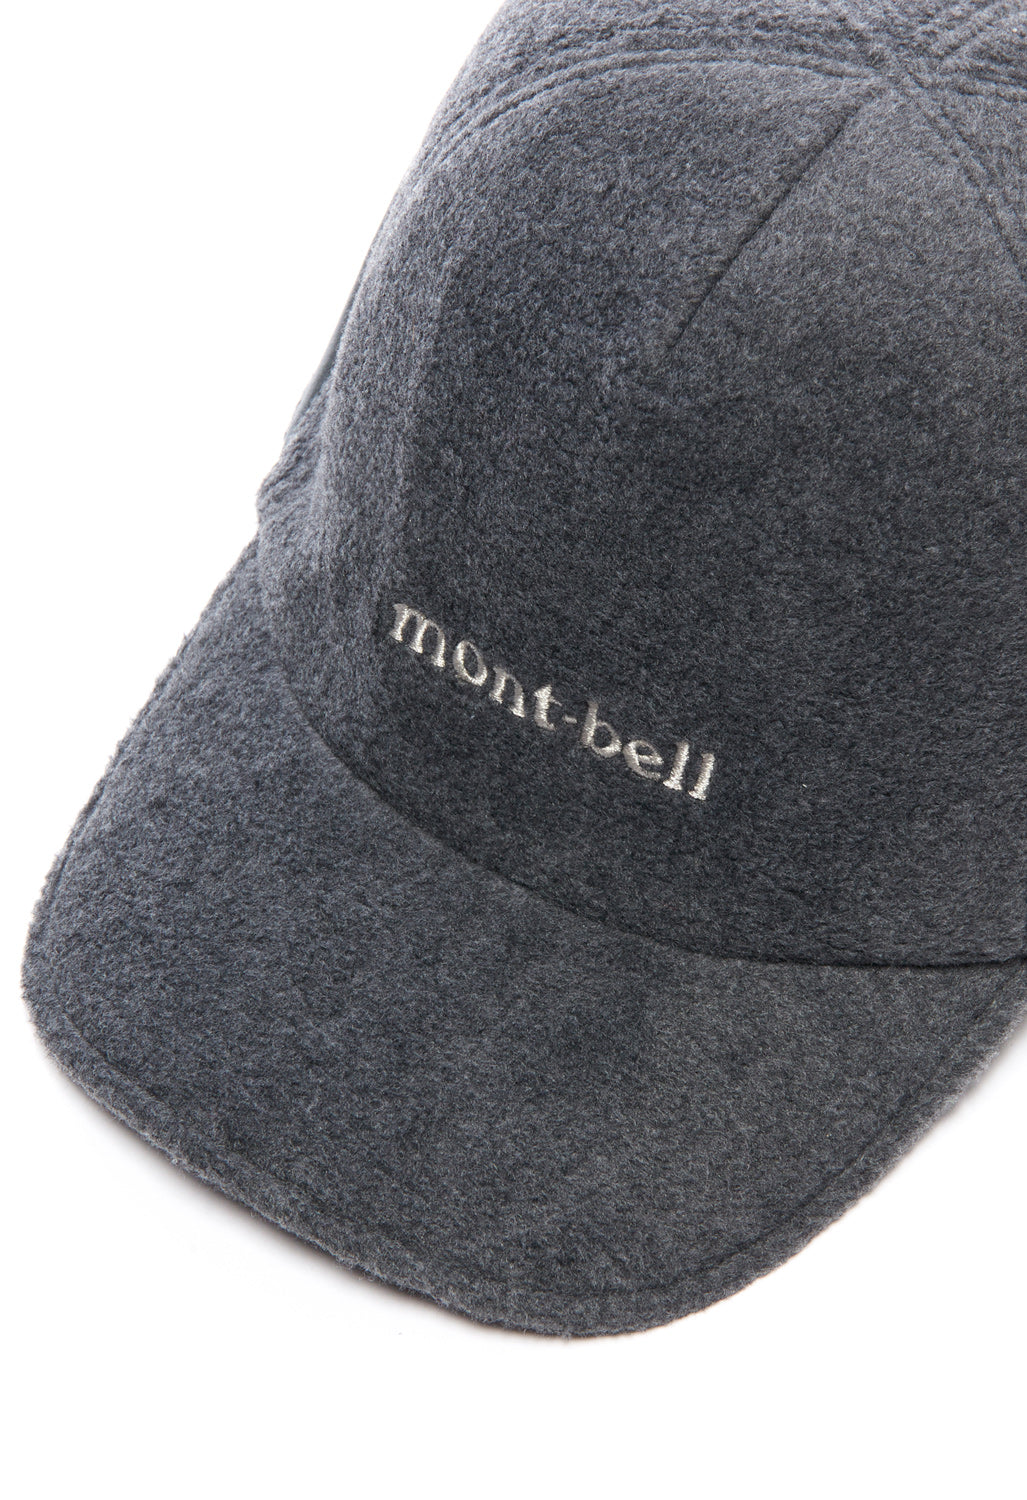 Montbell Climaplus 200 O.D. Ear Warmer Cap - Grey